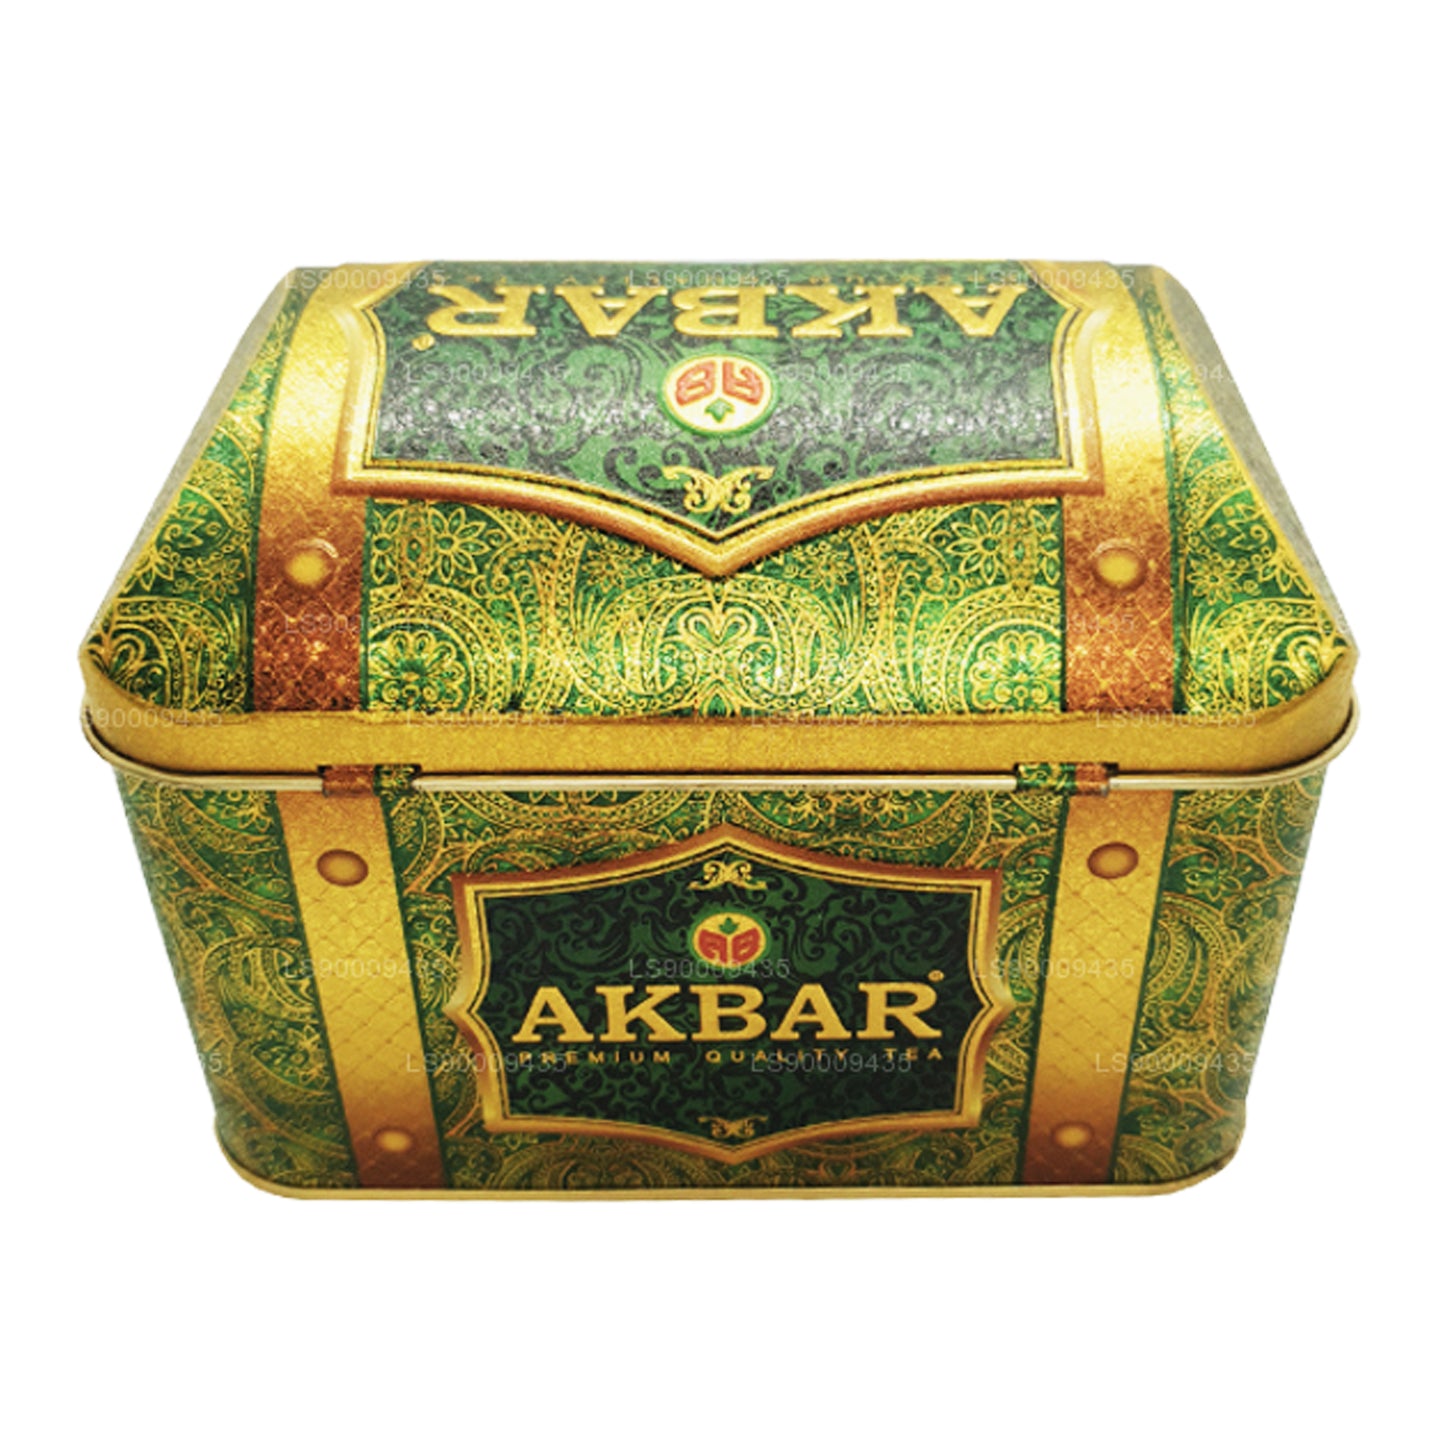 Akbar Exclusive Collection Rich Soursop Treasure Box (250 g)